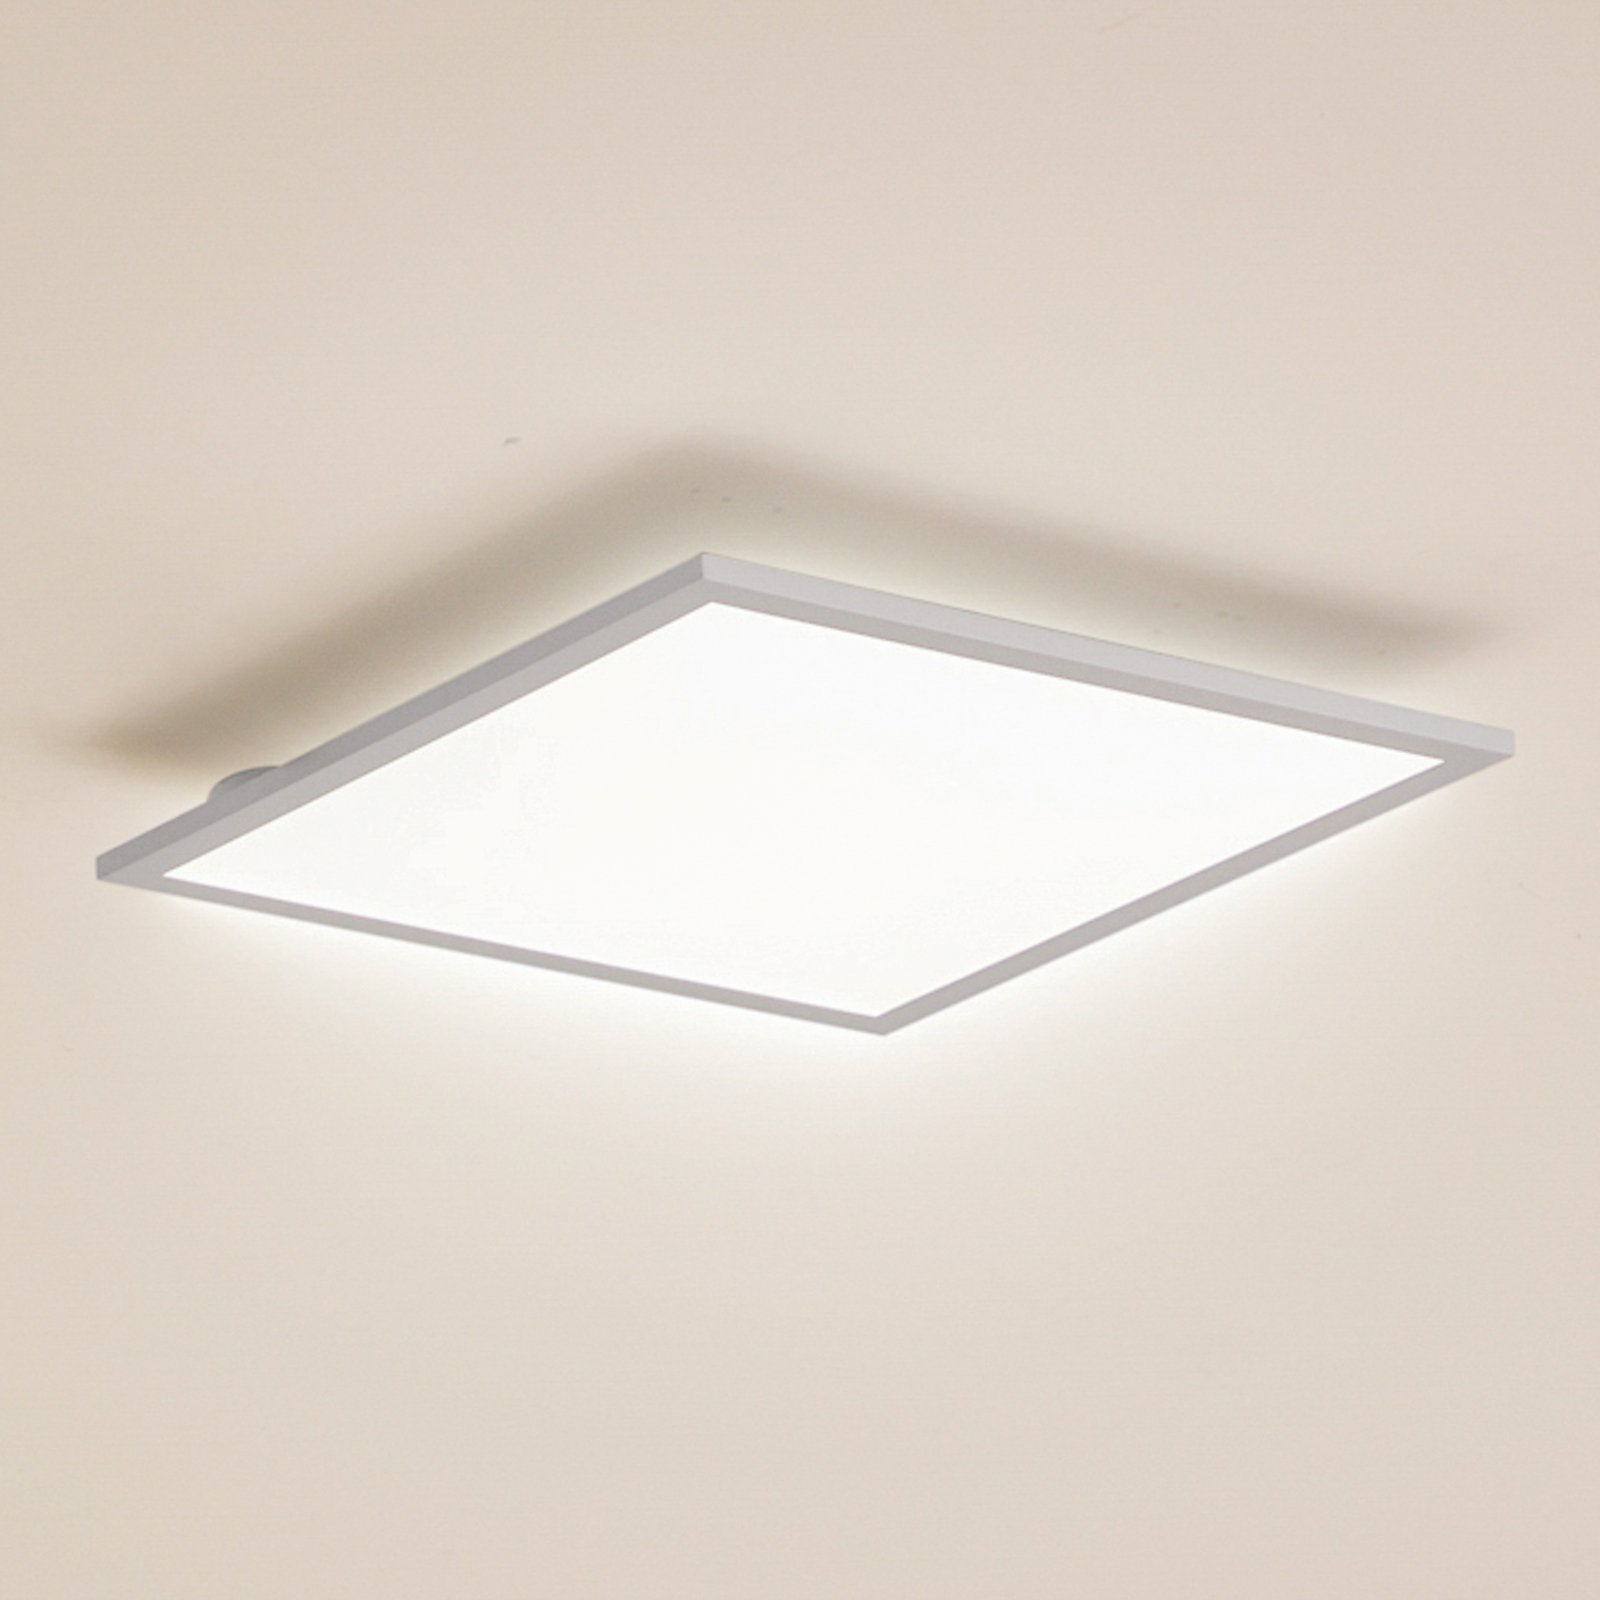 Lindby Panneau LED Enhife, blanc, 39,5 x 39,5 cm, aluminium